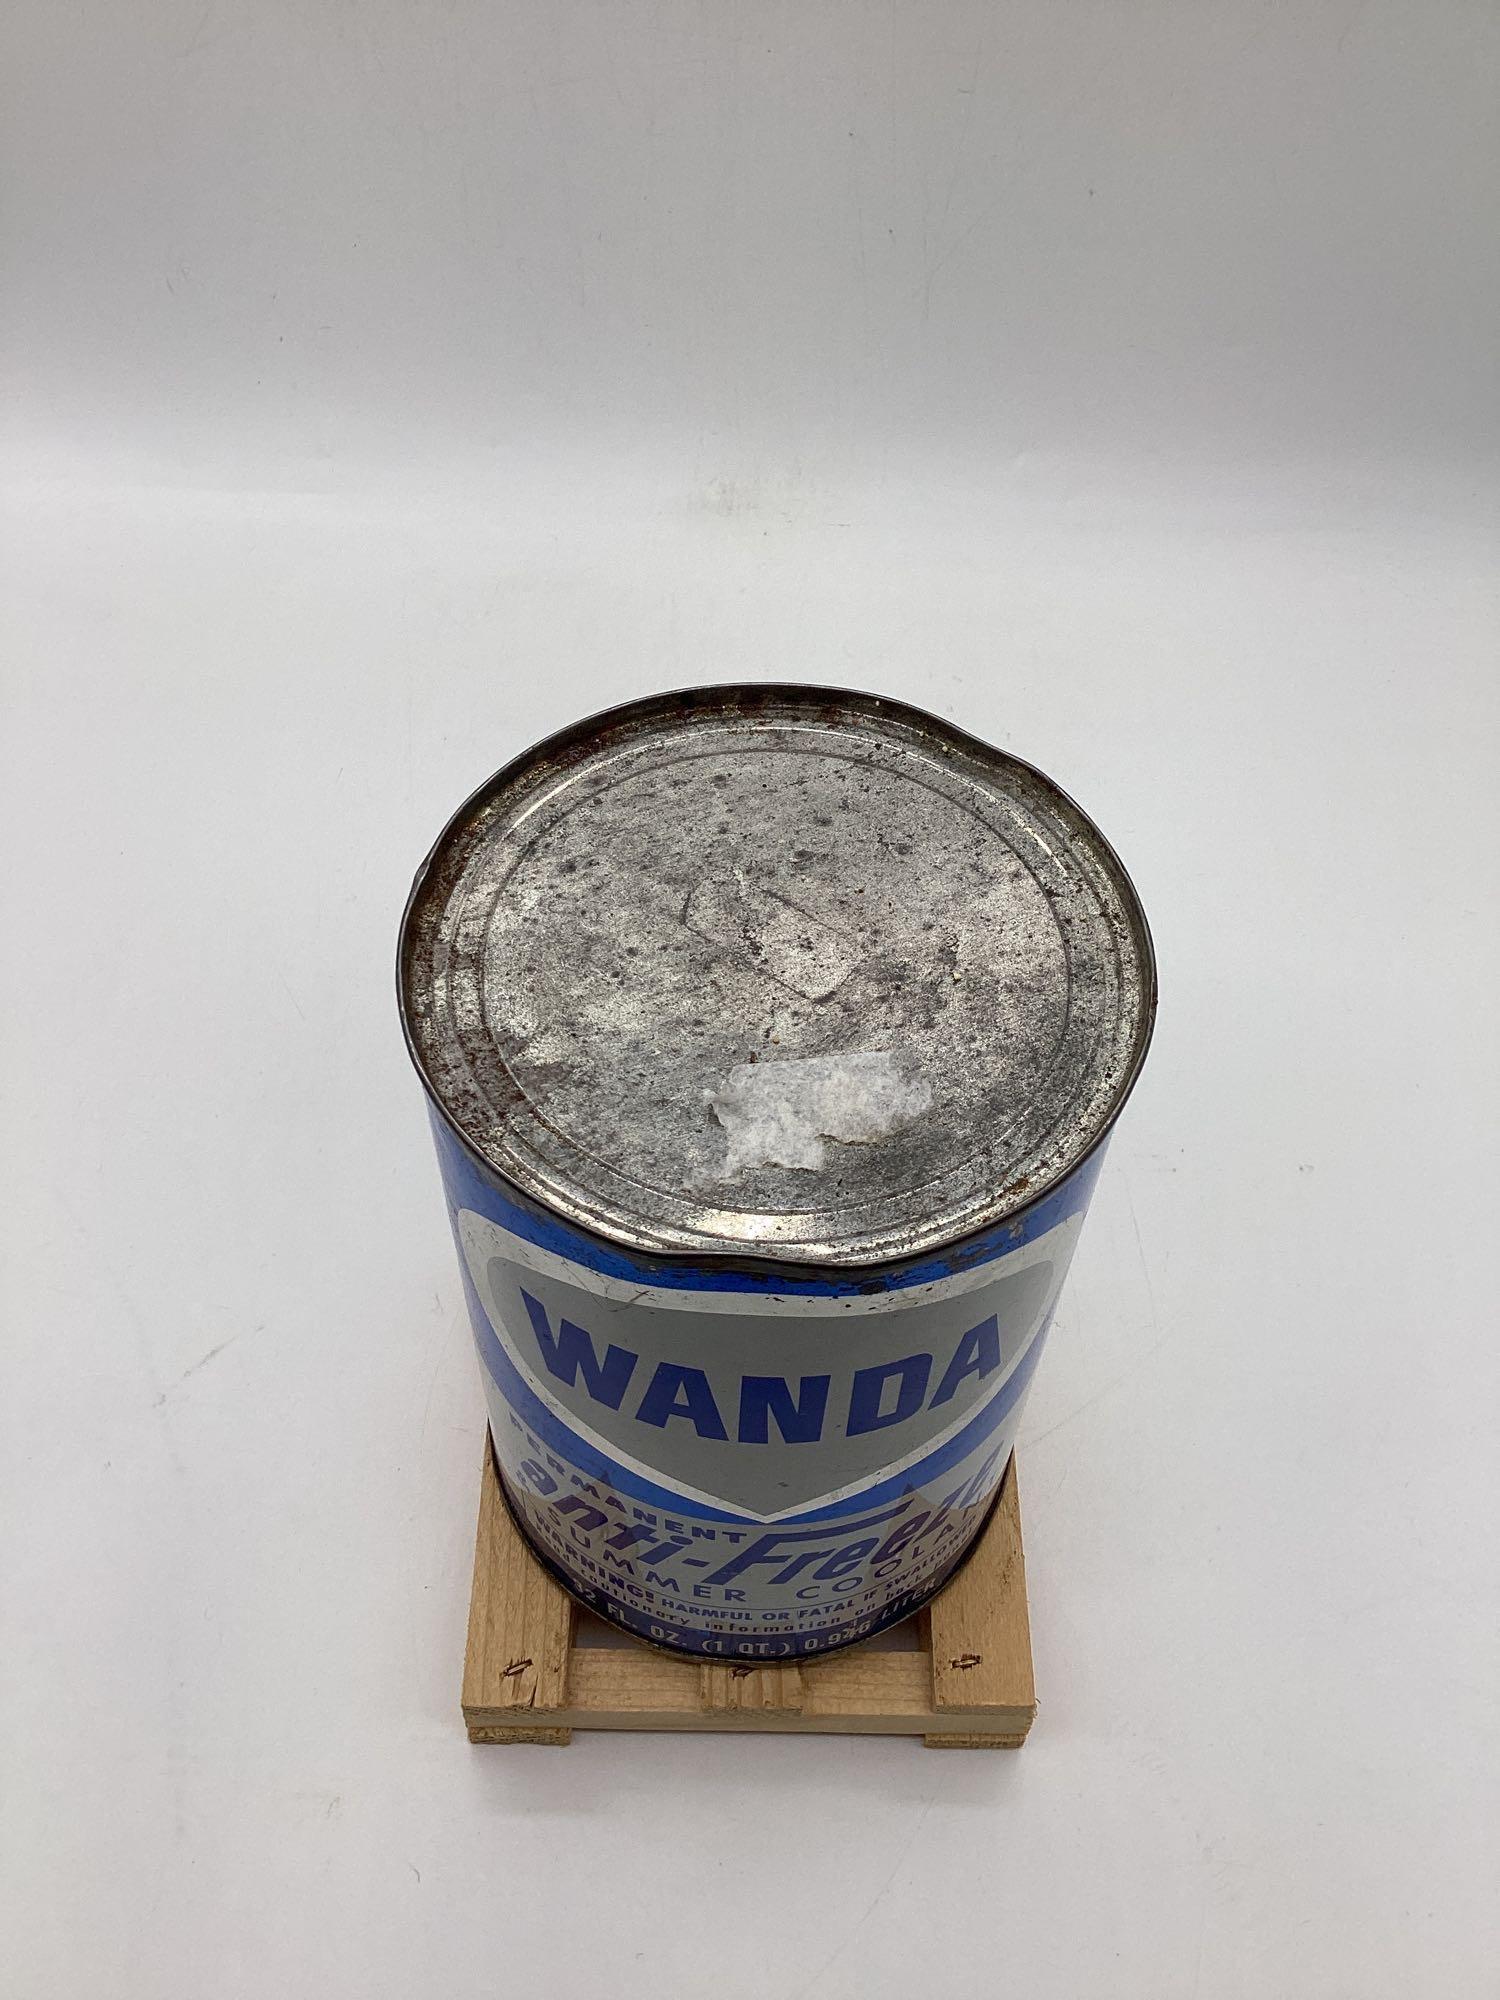 Wanda Anti-Freeze Quart Oil Can OKC